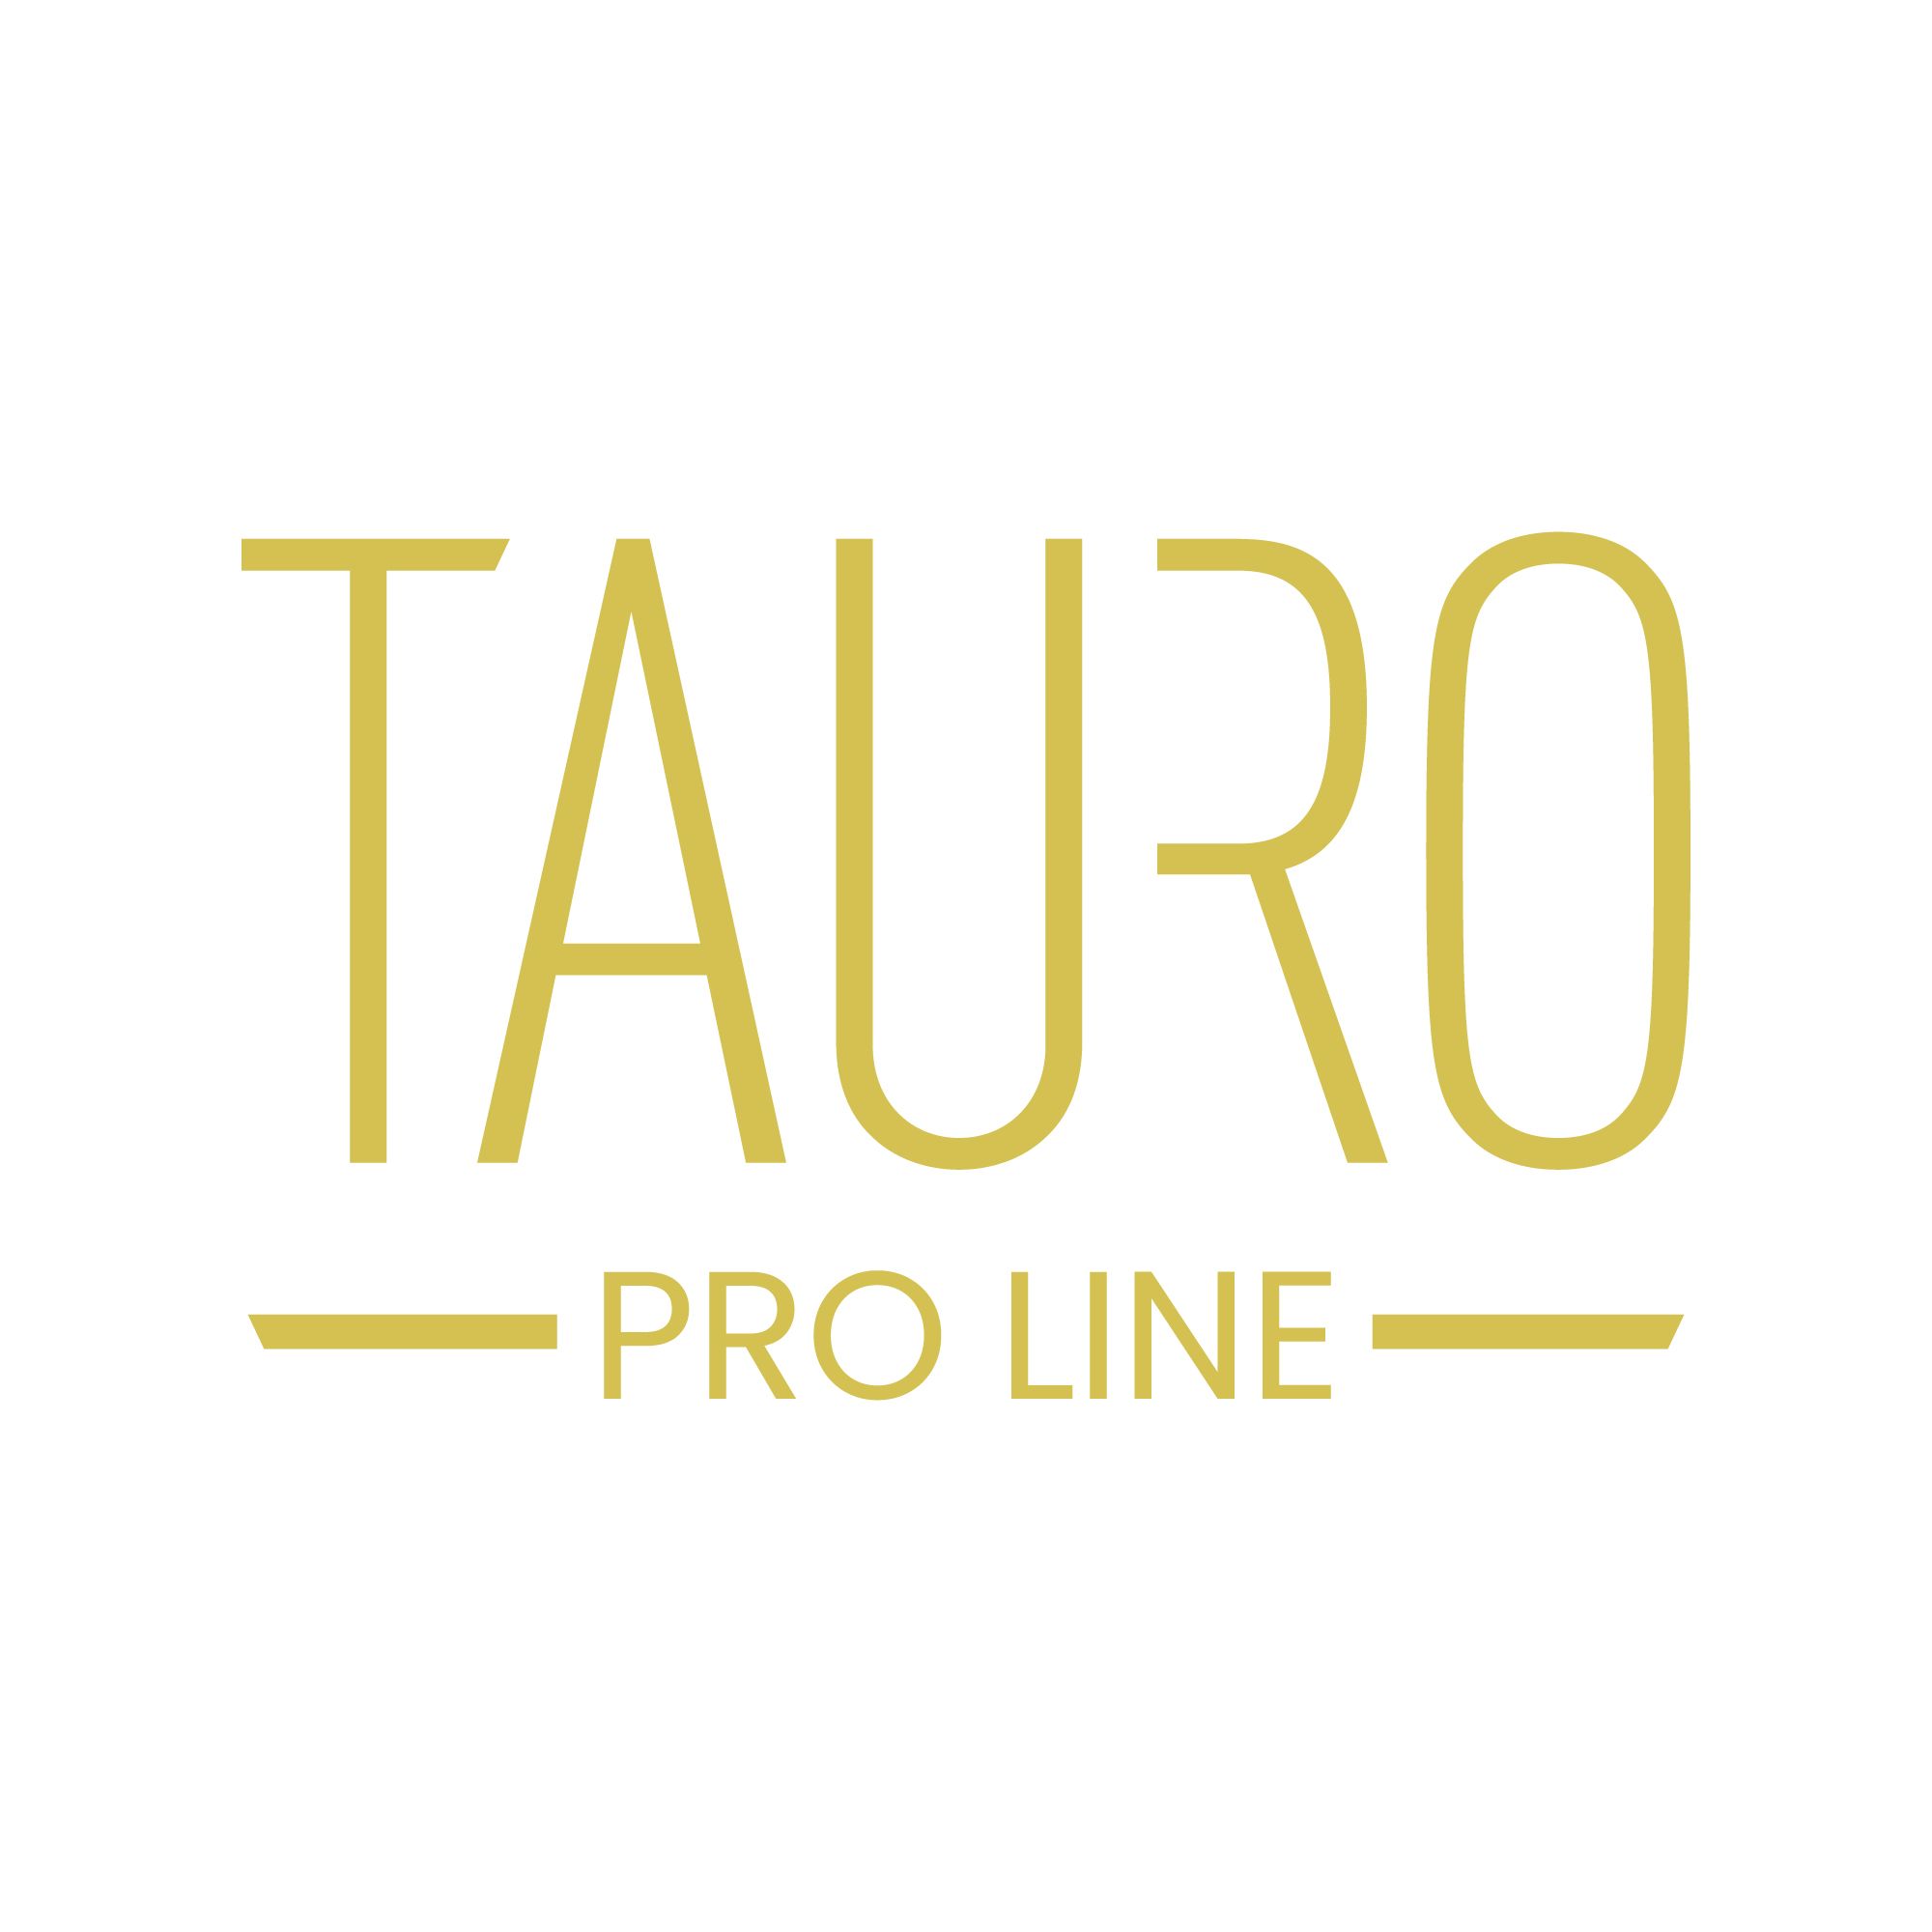 TAURO PRO LINE